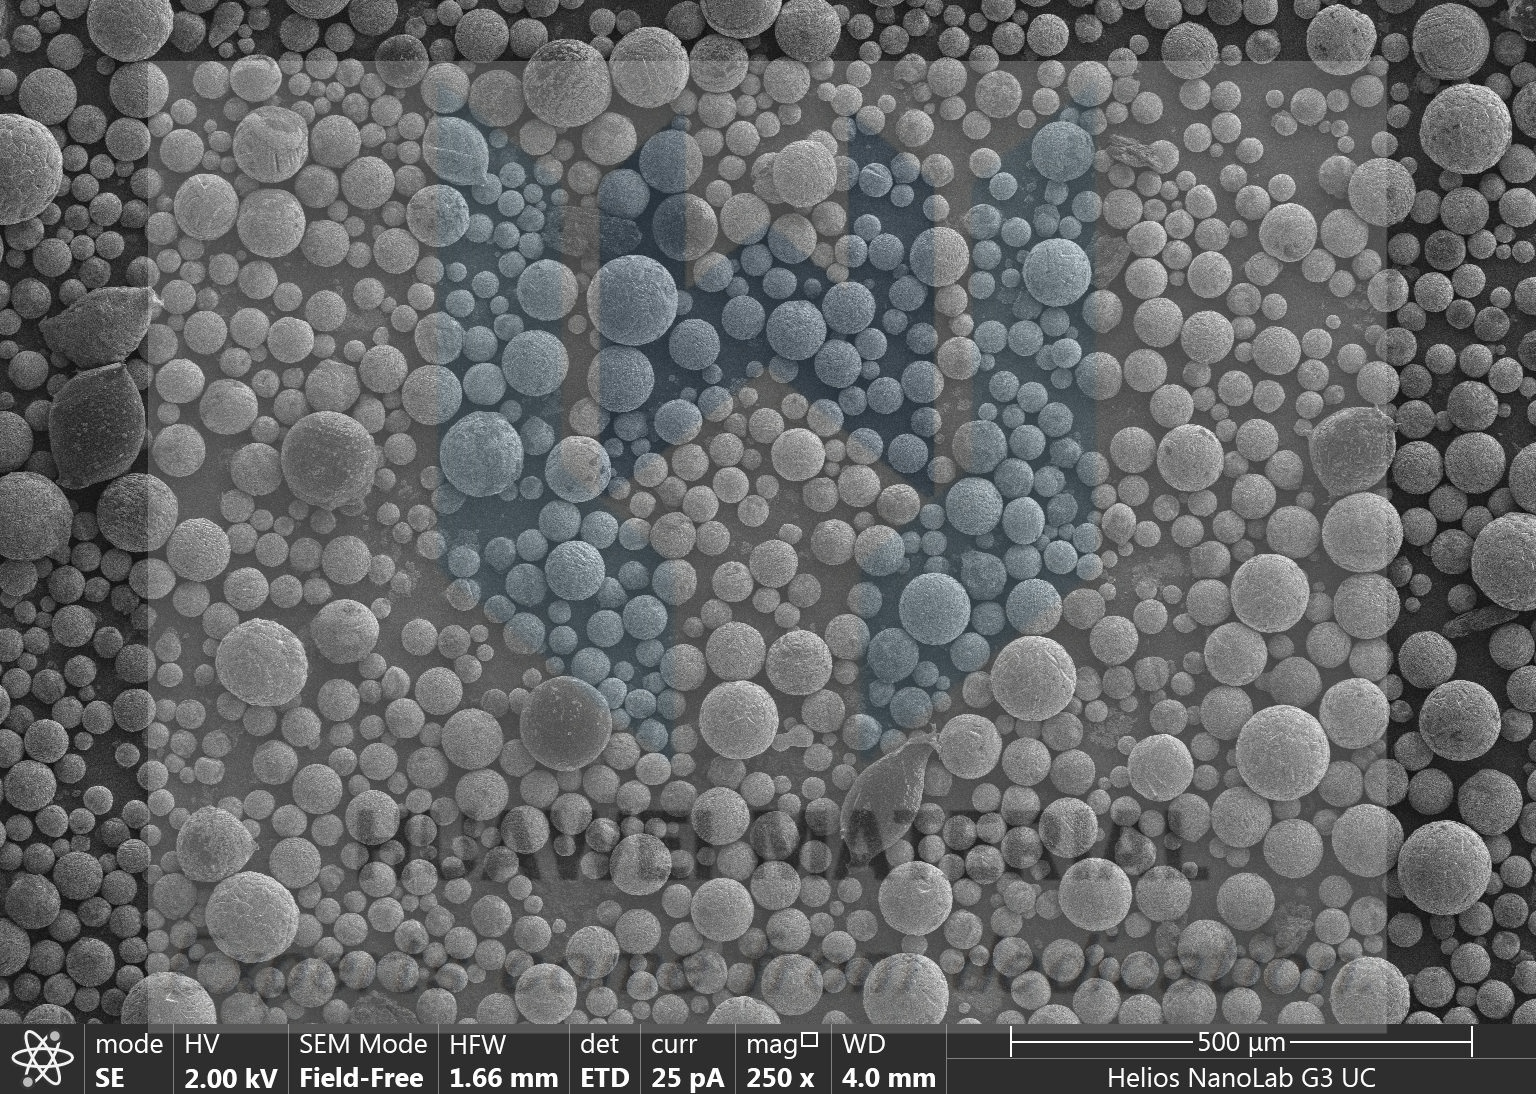 -Spherical Zirconium carbide (ZrC